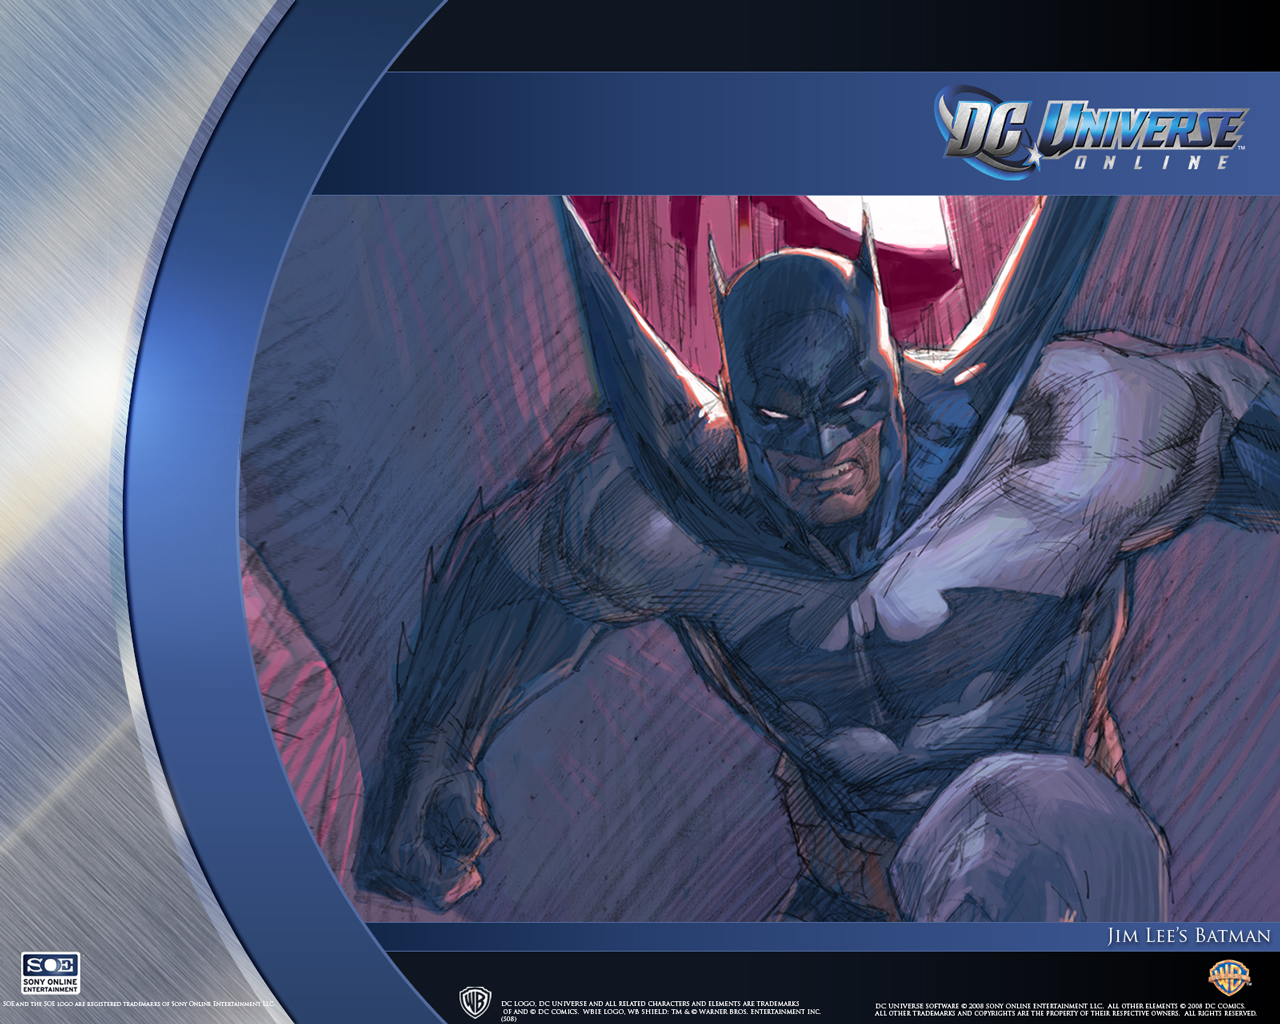 Batman Superhero Games Wallpaper Image Featuring Dc Universe Online